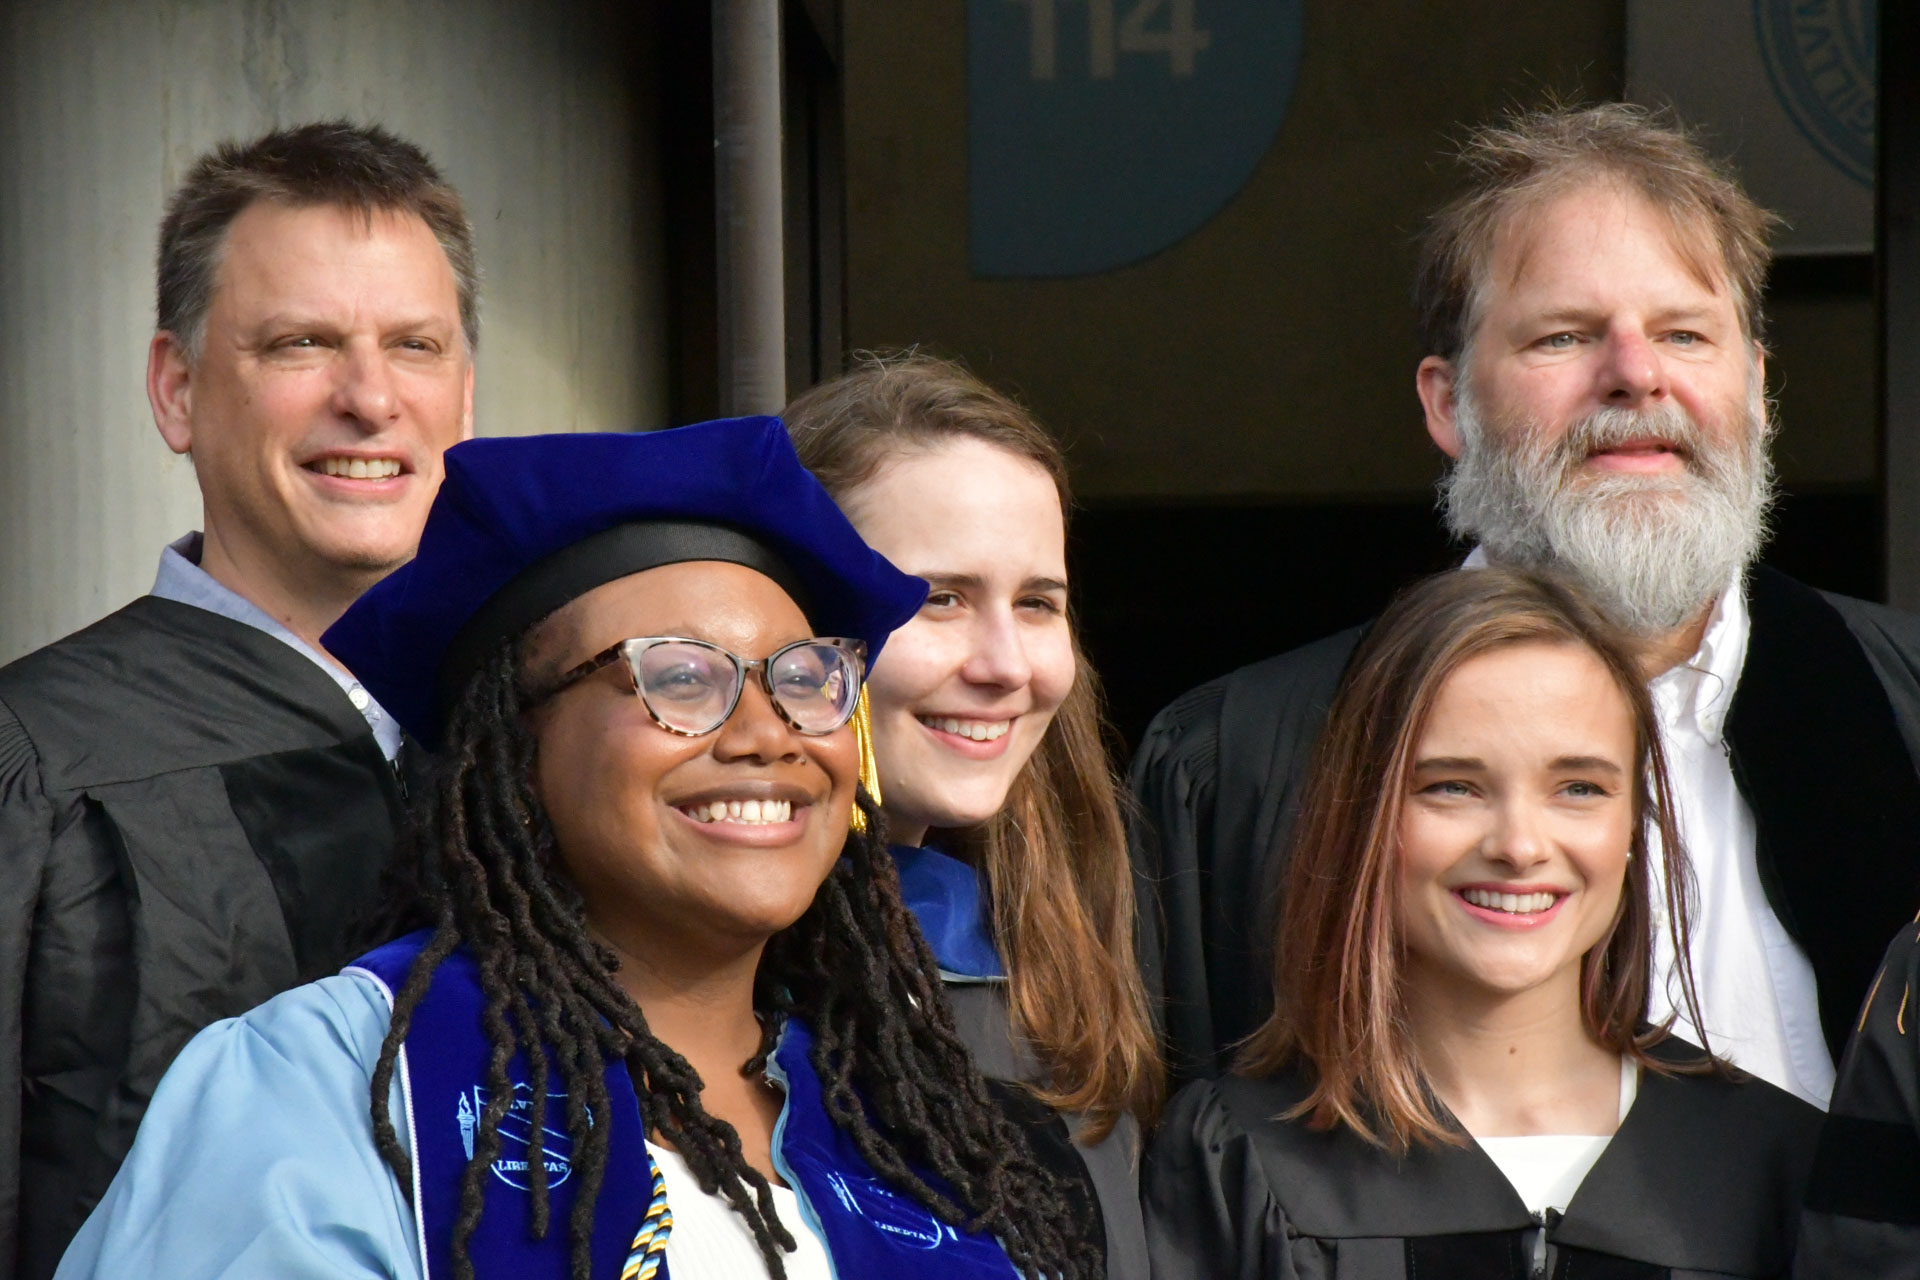 University of North Carolina at Chapel Hill ranked highly among doctoral degrees to underrepresented graduates